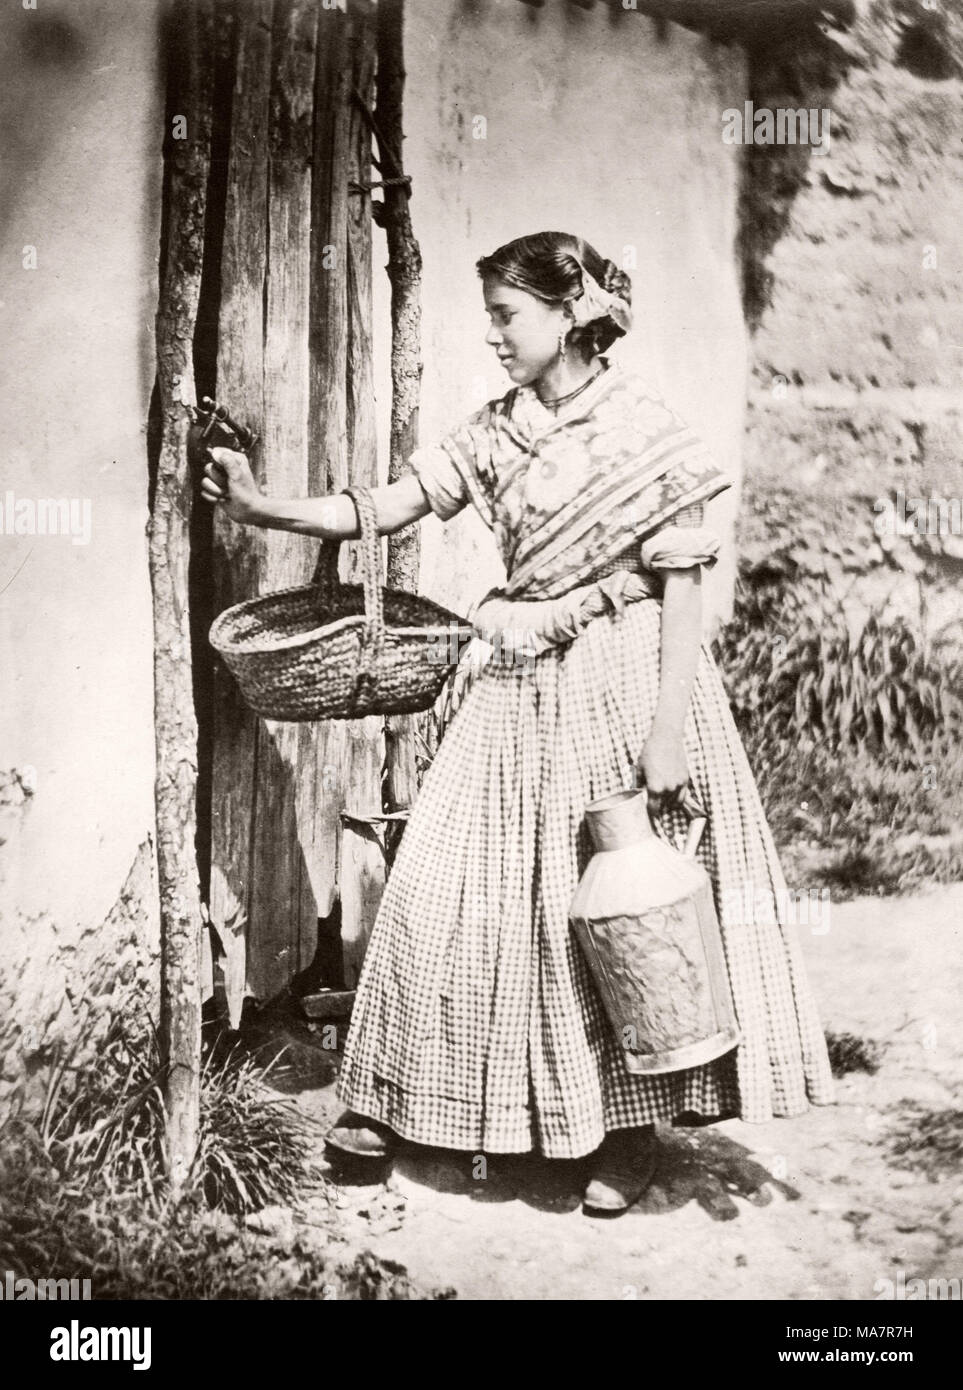 https://c8.alamy.com/comp/MA7R7H/19th-century-vintage-photograph-spain-juan-laurent-photographer-portrait-of-a-young-spanish-woman-milkmaid-milk-maid-MA7R7H.jpg